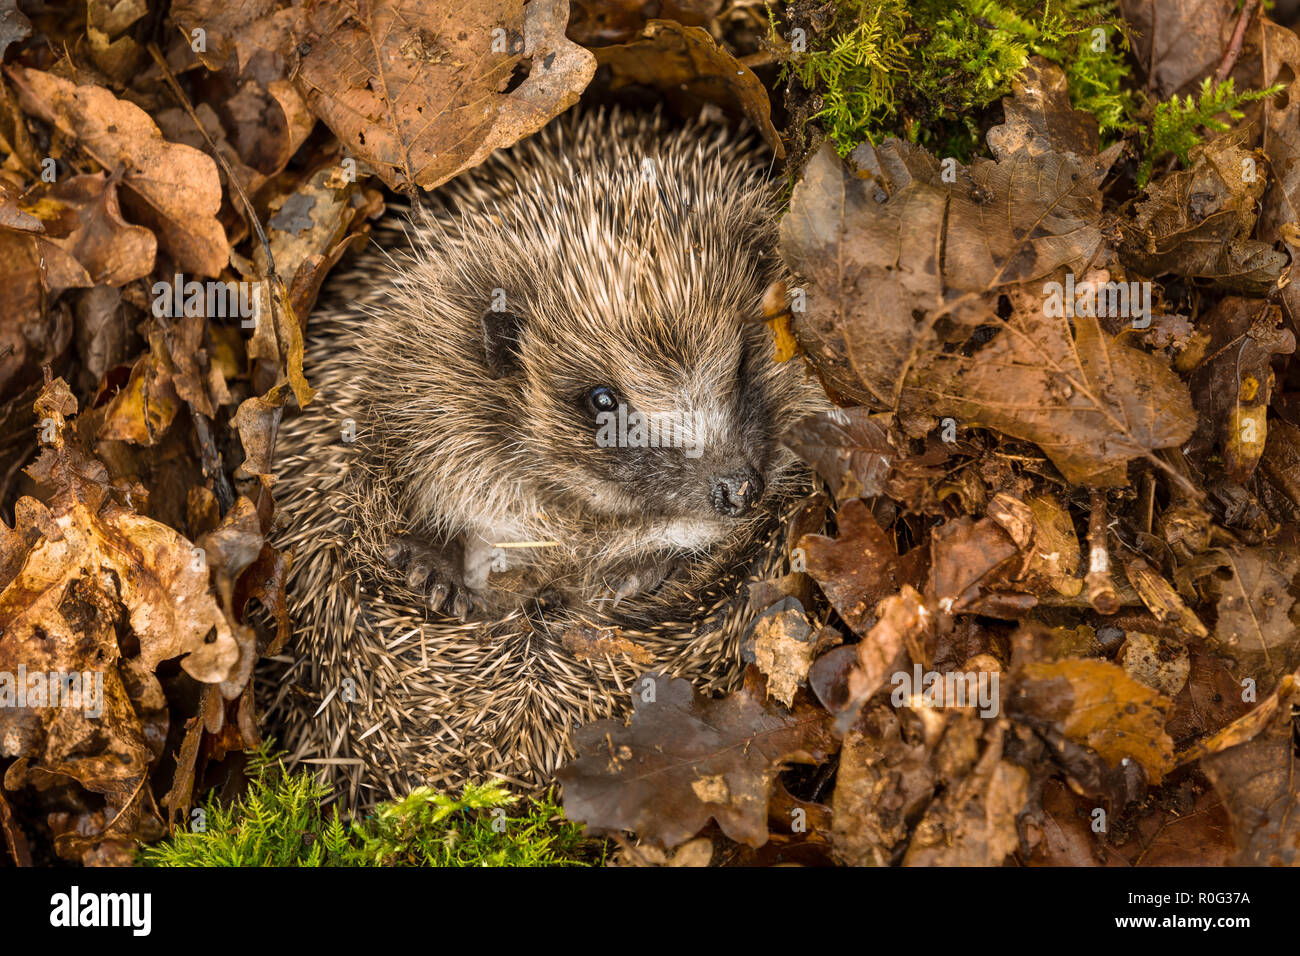 Hibernating Hedgehog High Resolution Stock Photography And Images Alamy